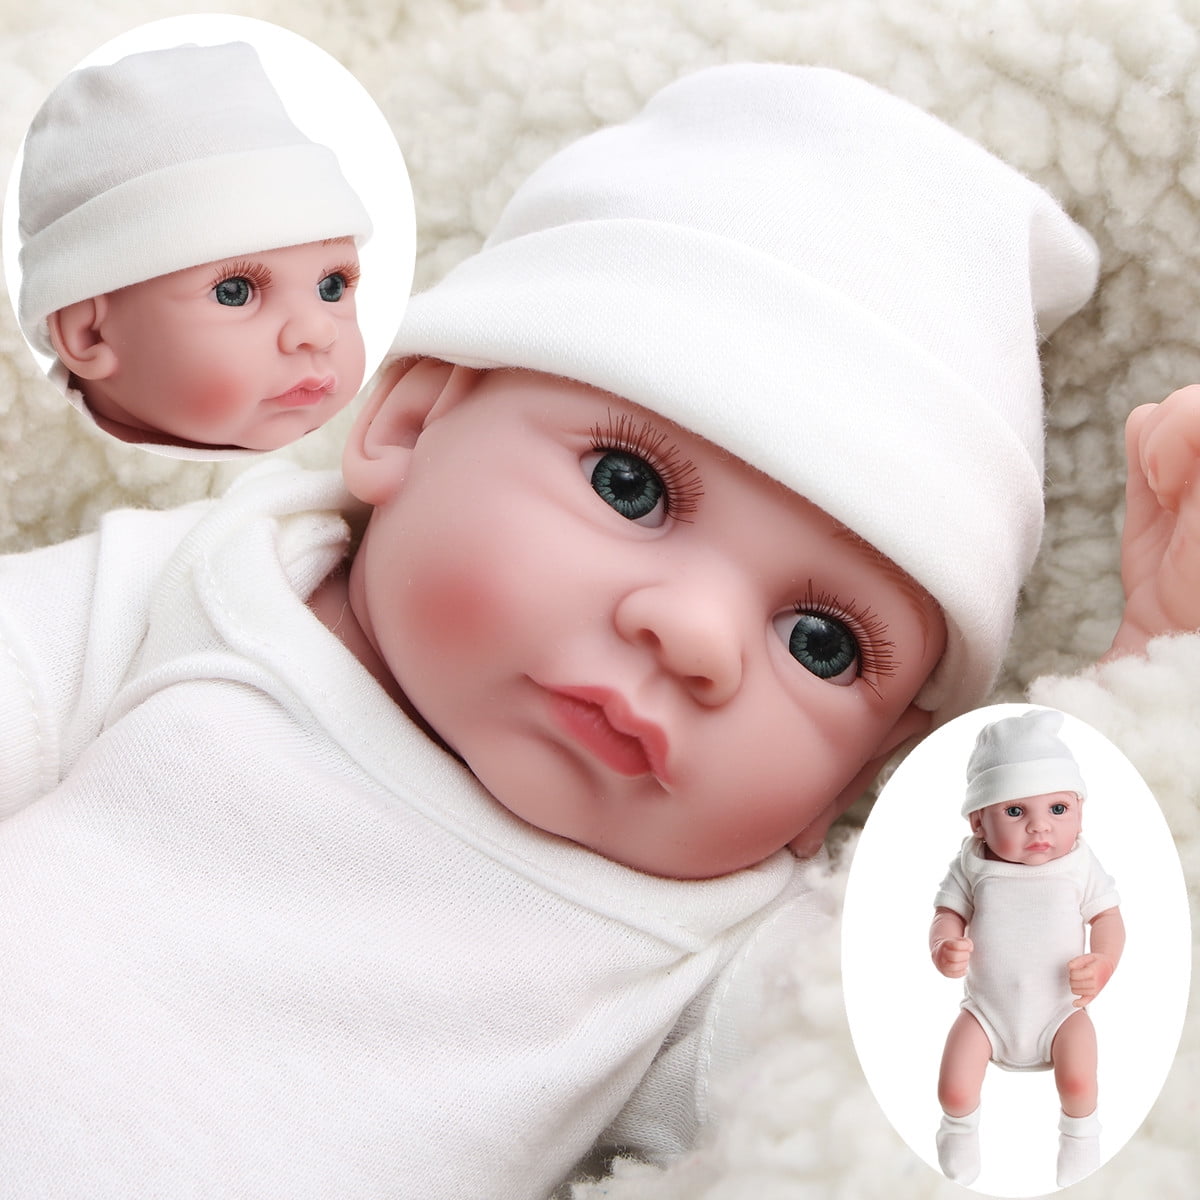 10" Full Body Vinyl Silicone Baby Dolls Handmade Lifelike Newborn Boy Doll Gift 